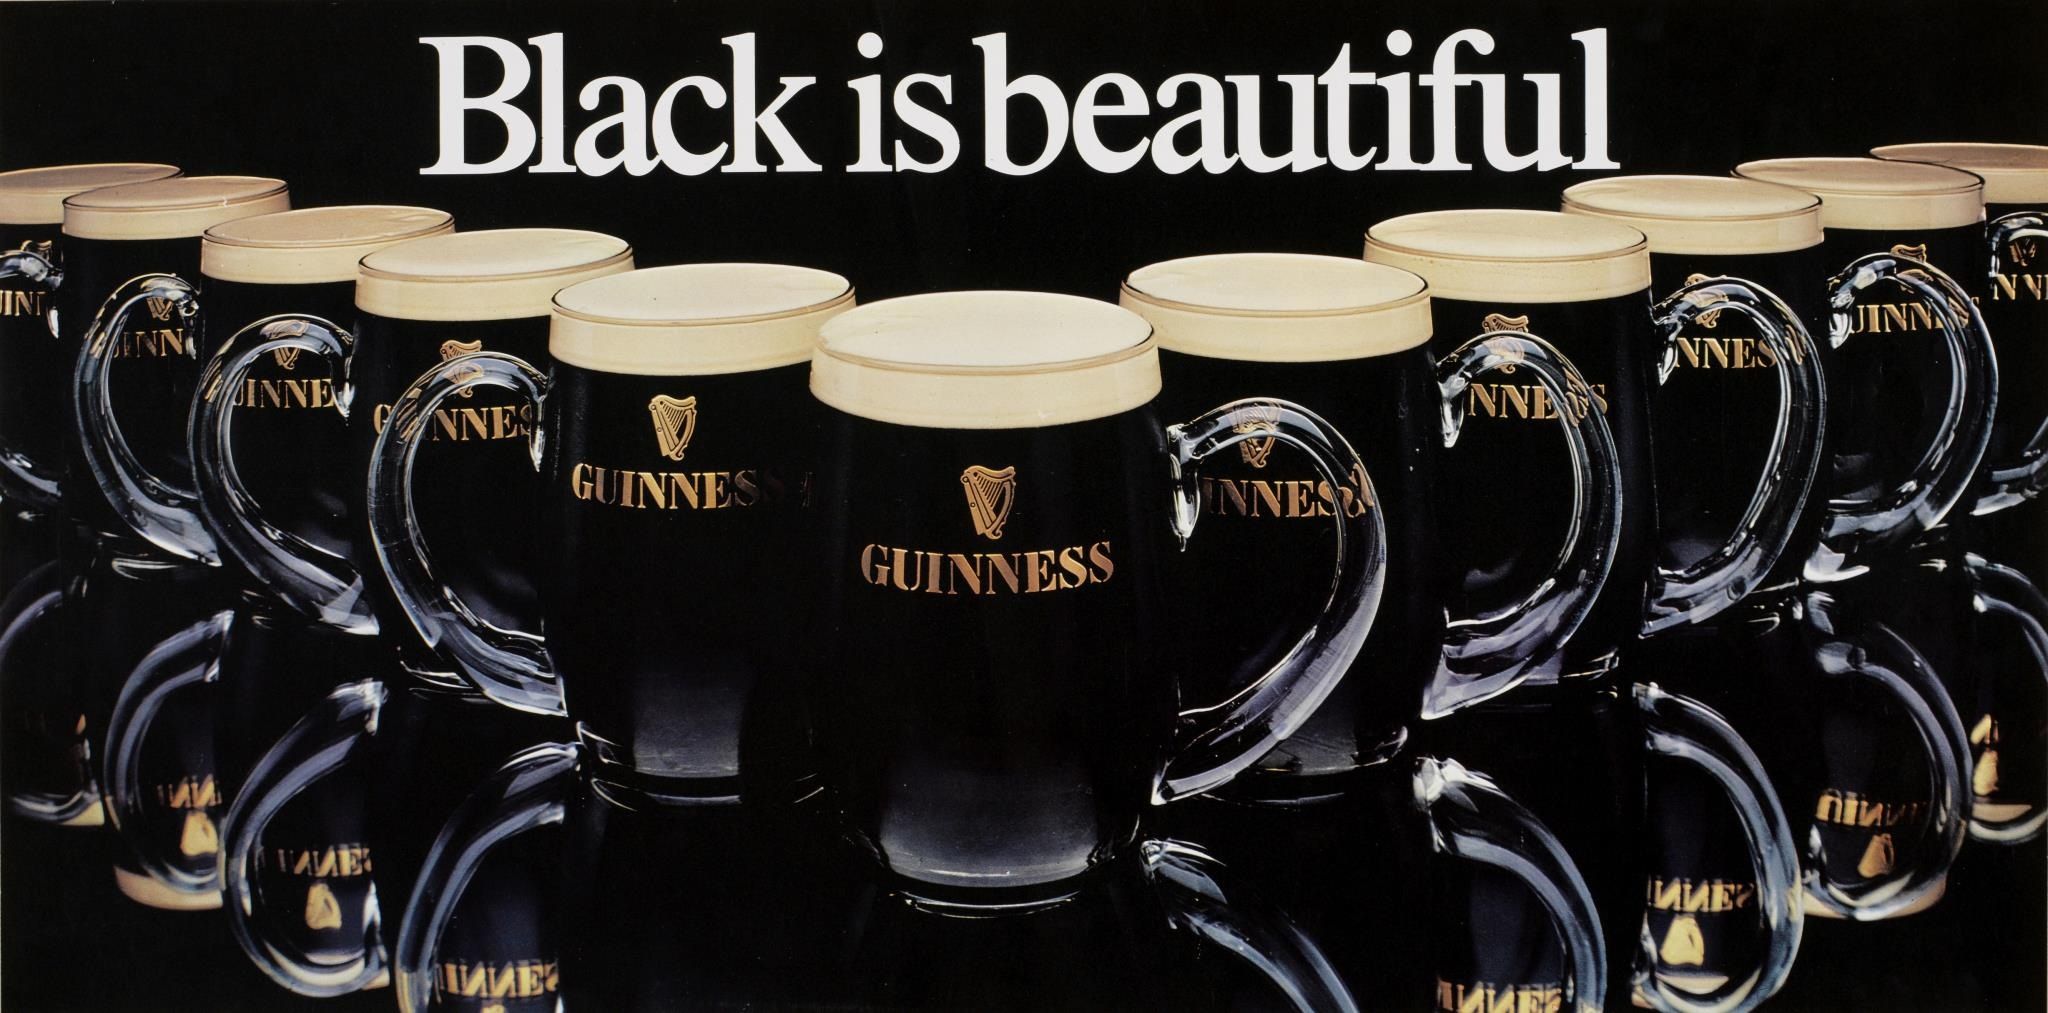 Black is beautiful | Guinness, Best beer, Beers of the world